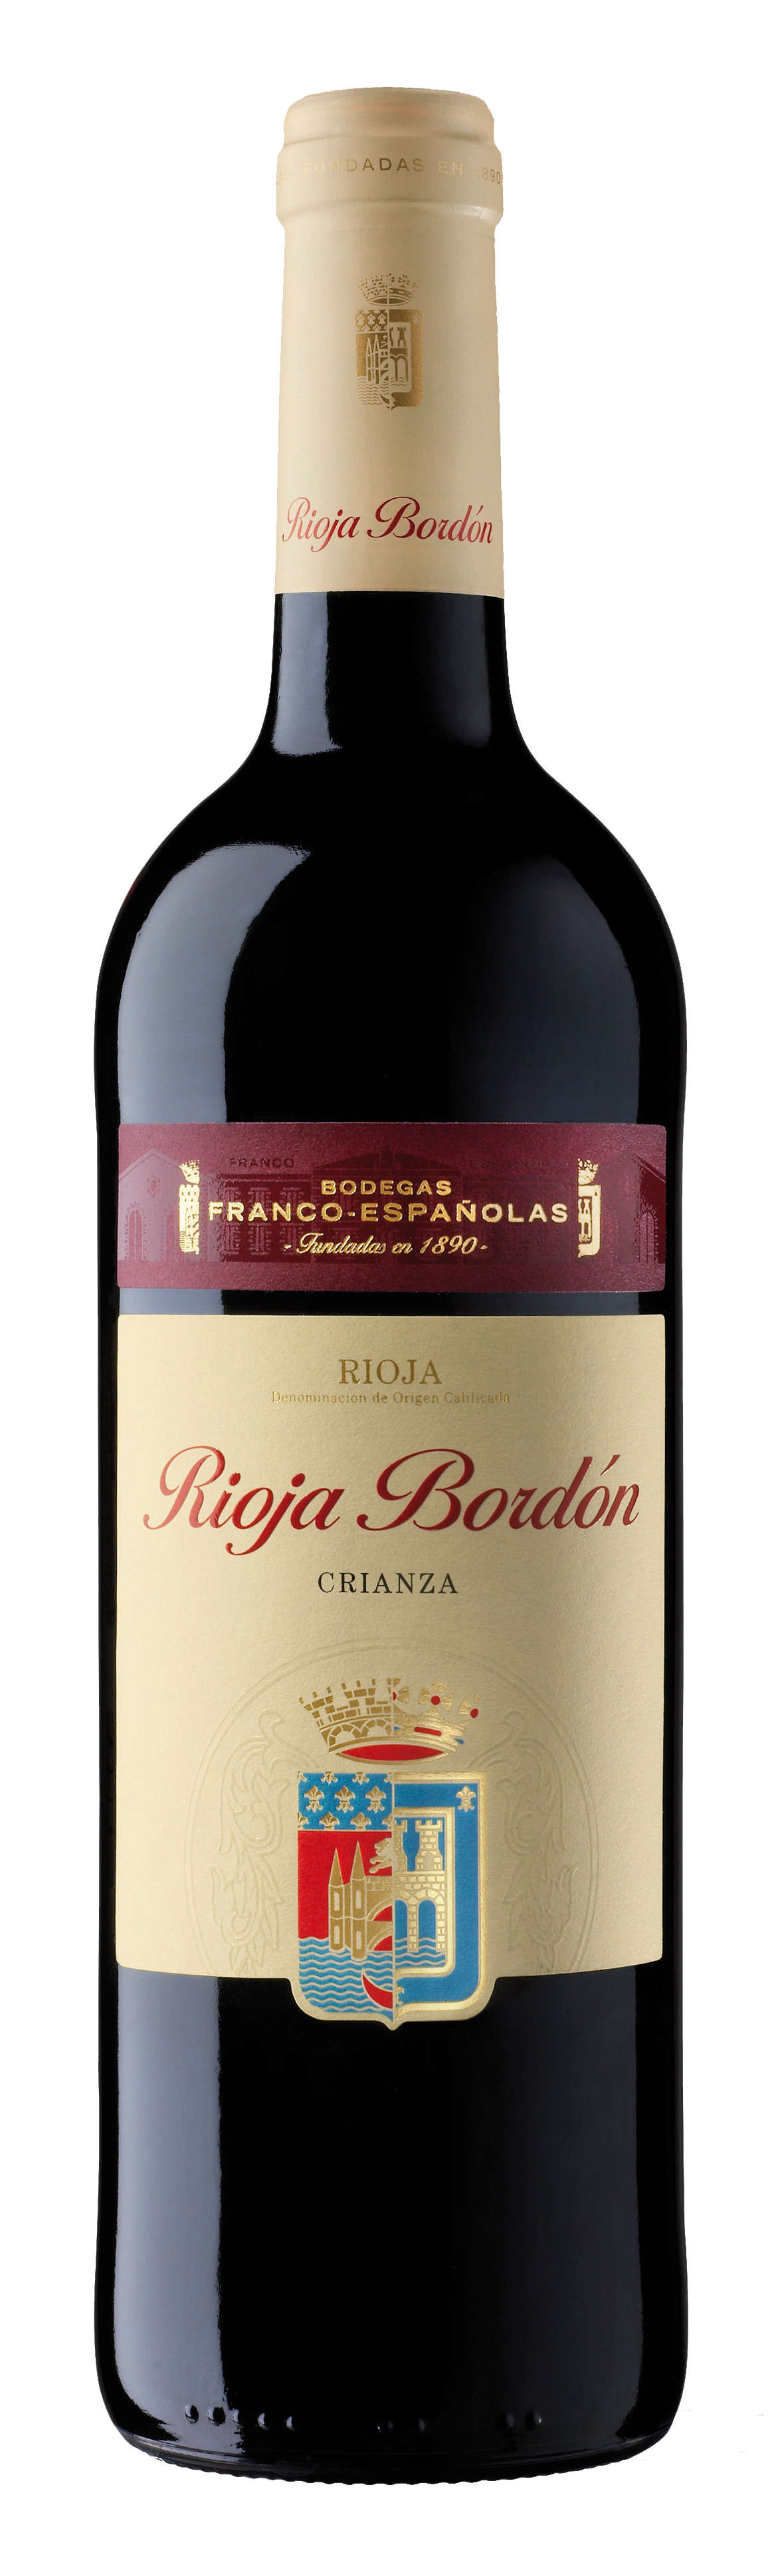 Rioja Bordon Crianza Bottle shot